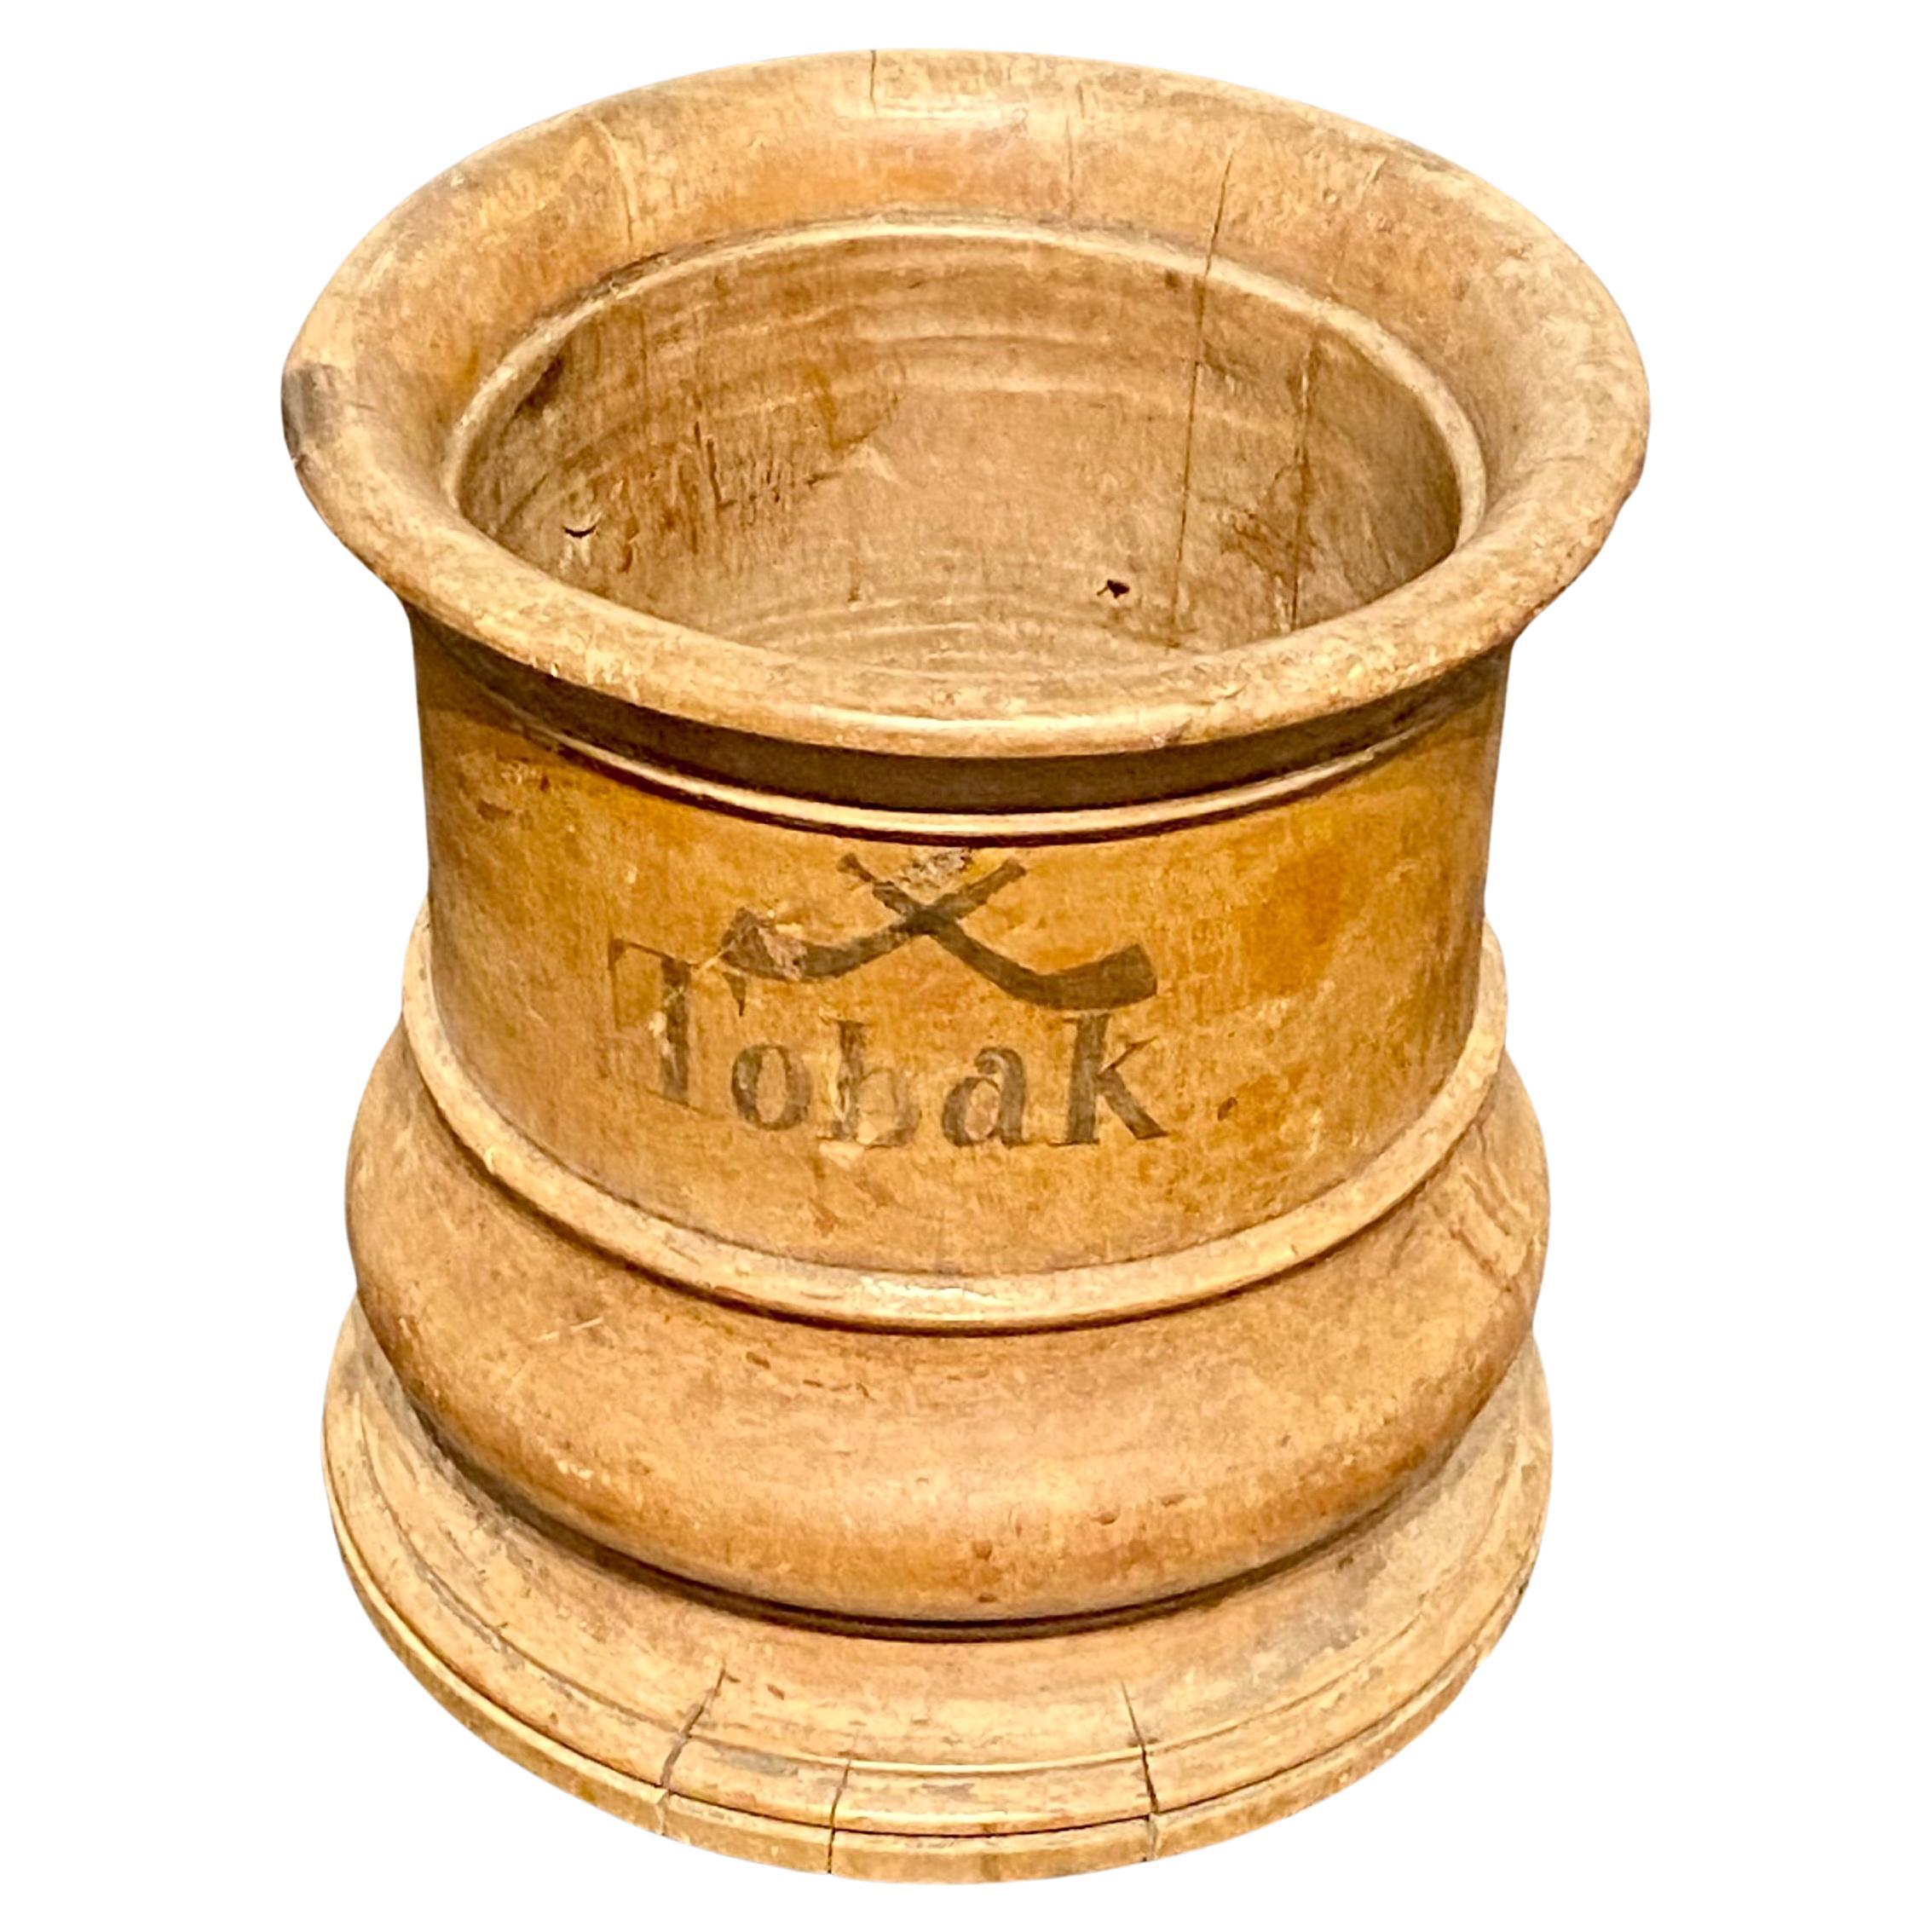 Small Circular Danish wooden tobacco jar, circa 1800-1825

The jar has 